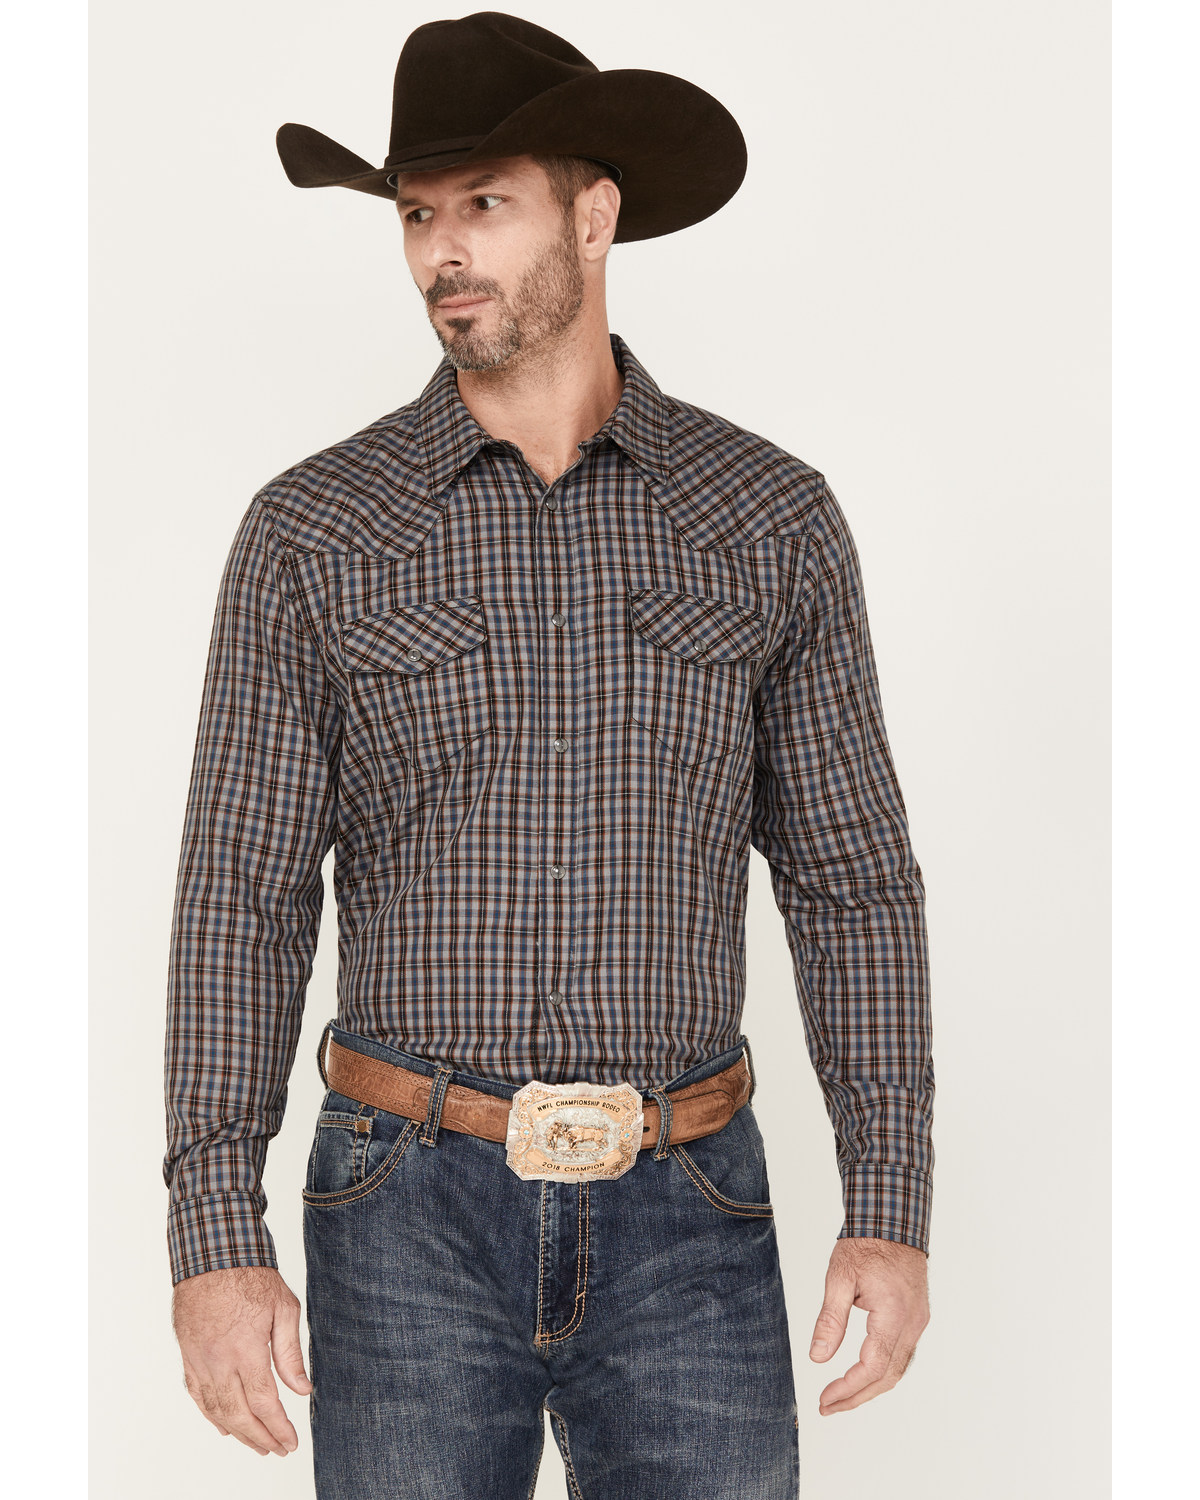 Gibson Men's Foundation Plaid Print Long Sleeve Snap Western Shirt